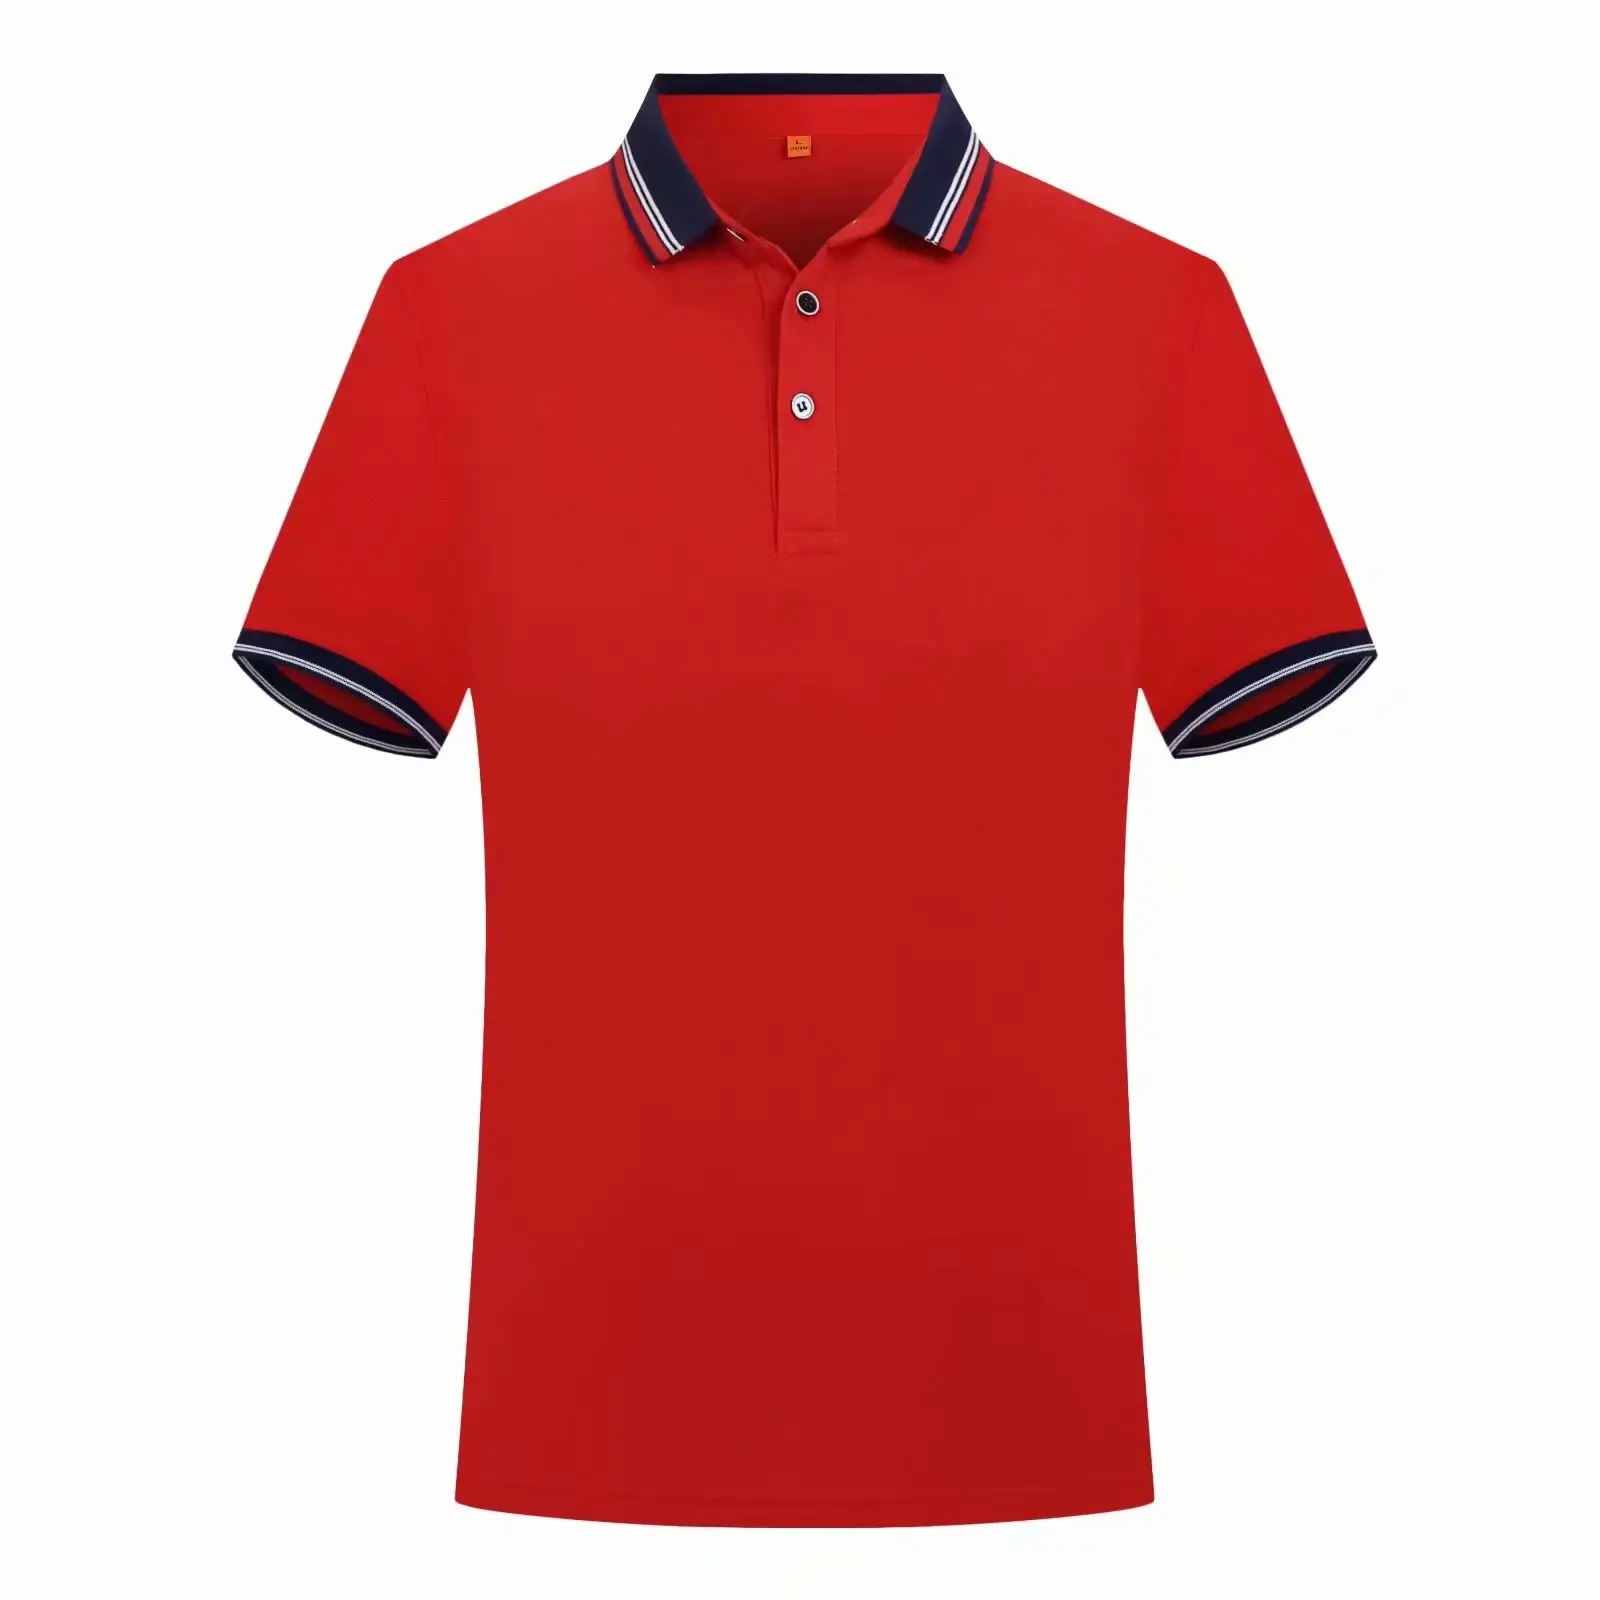 Özel Polo t-shirt Unisex düz pamuk toptan kısa kollu t-shirt erkek bayan Polo GÖMLEK boş